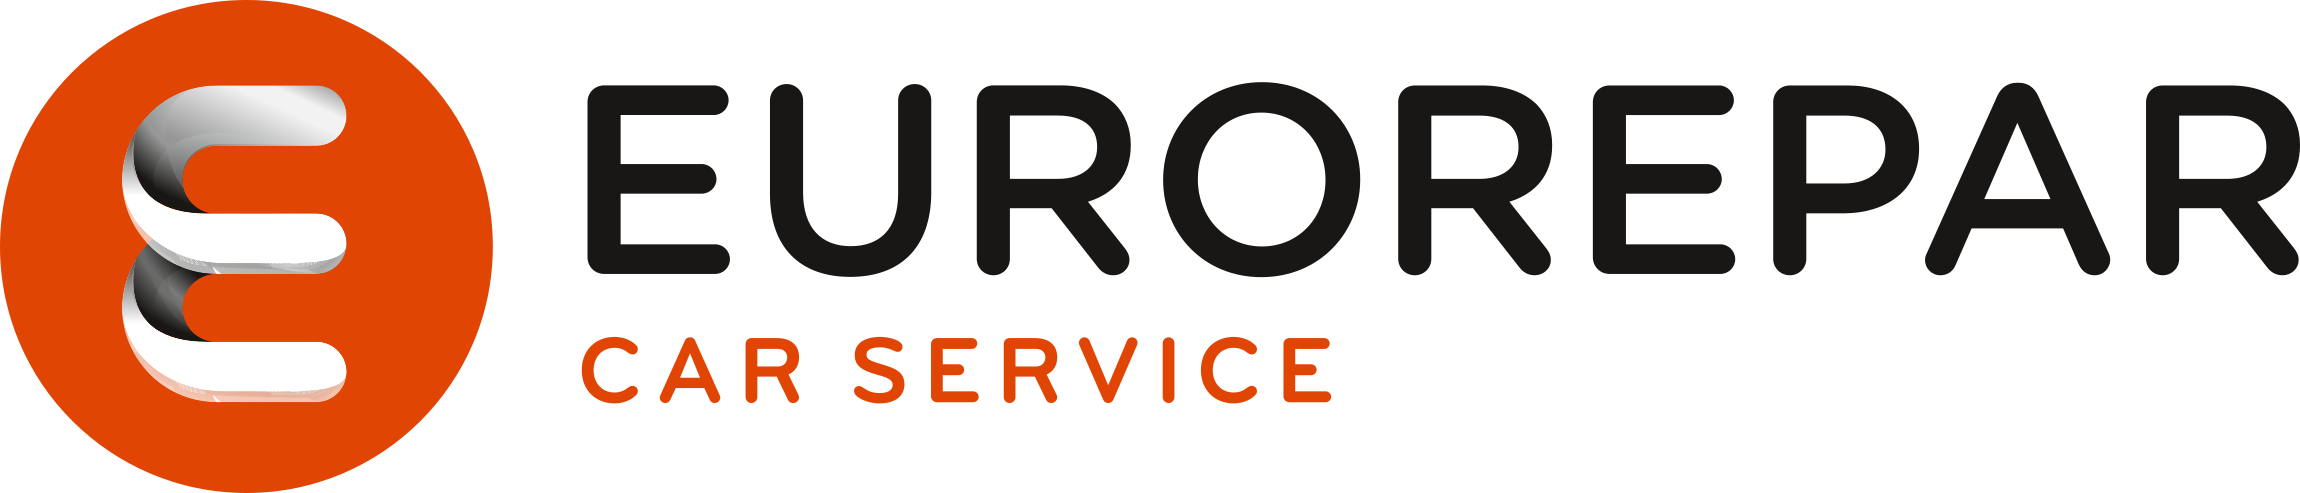 EURO REPAR Car Service